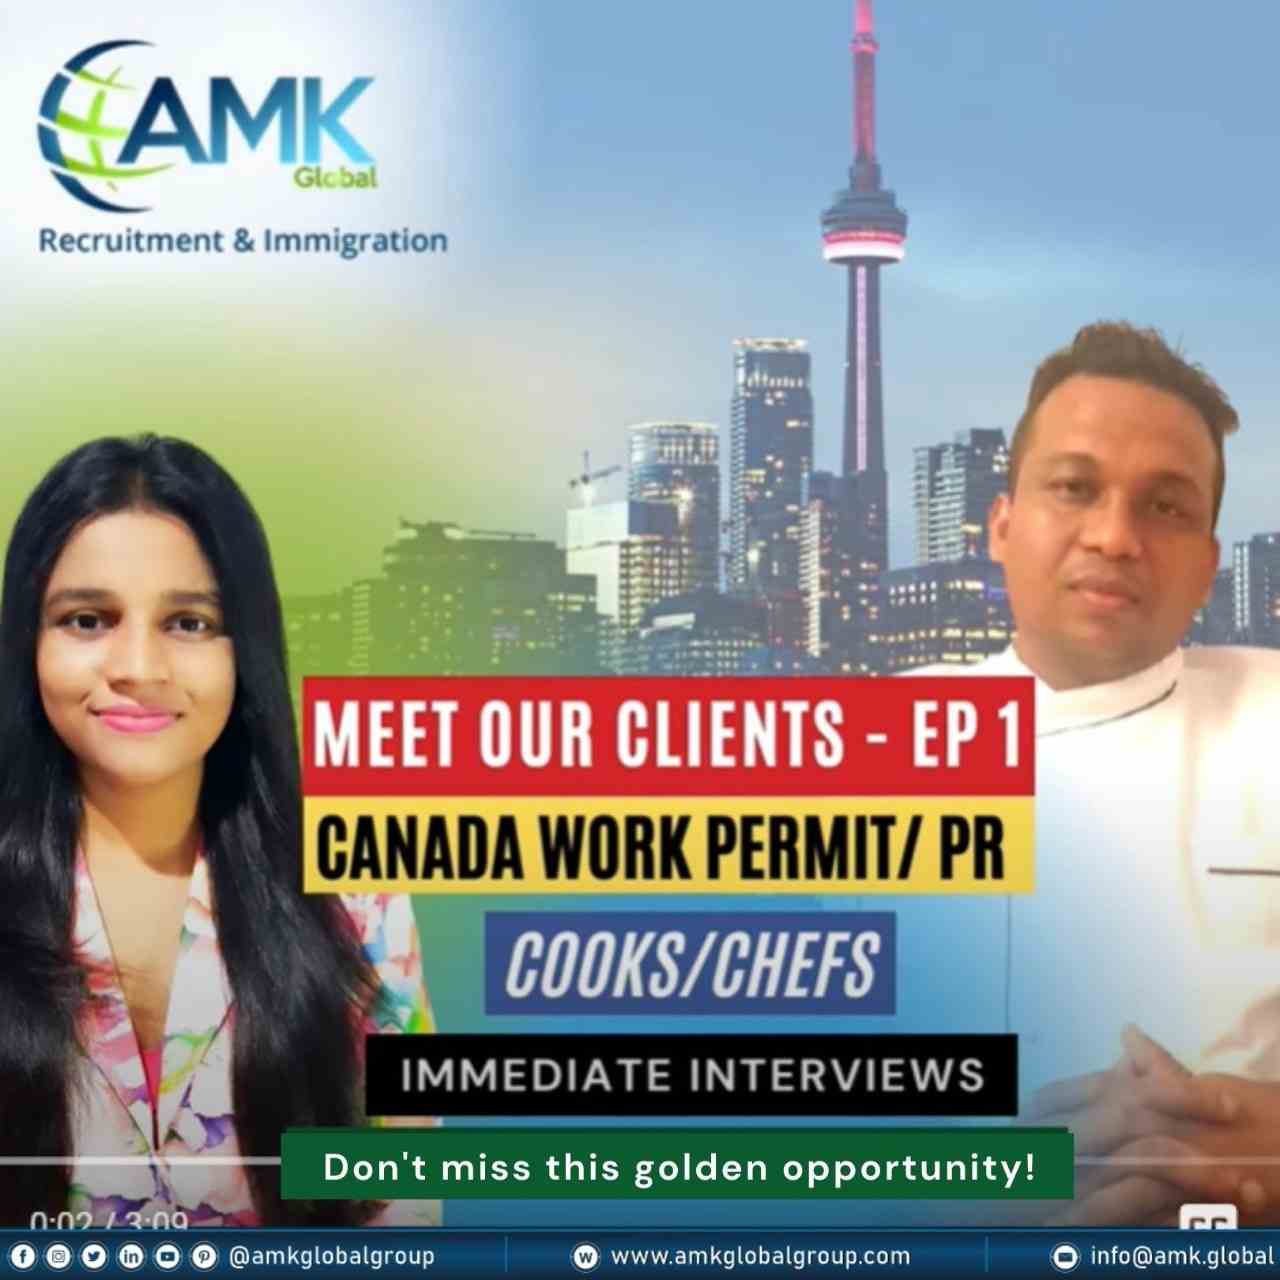 EP 1 Canada Work permit AMK Global